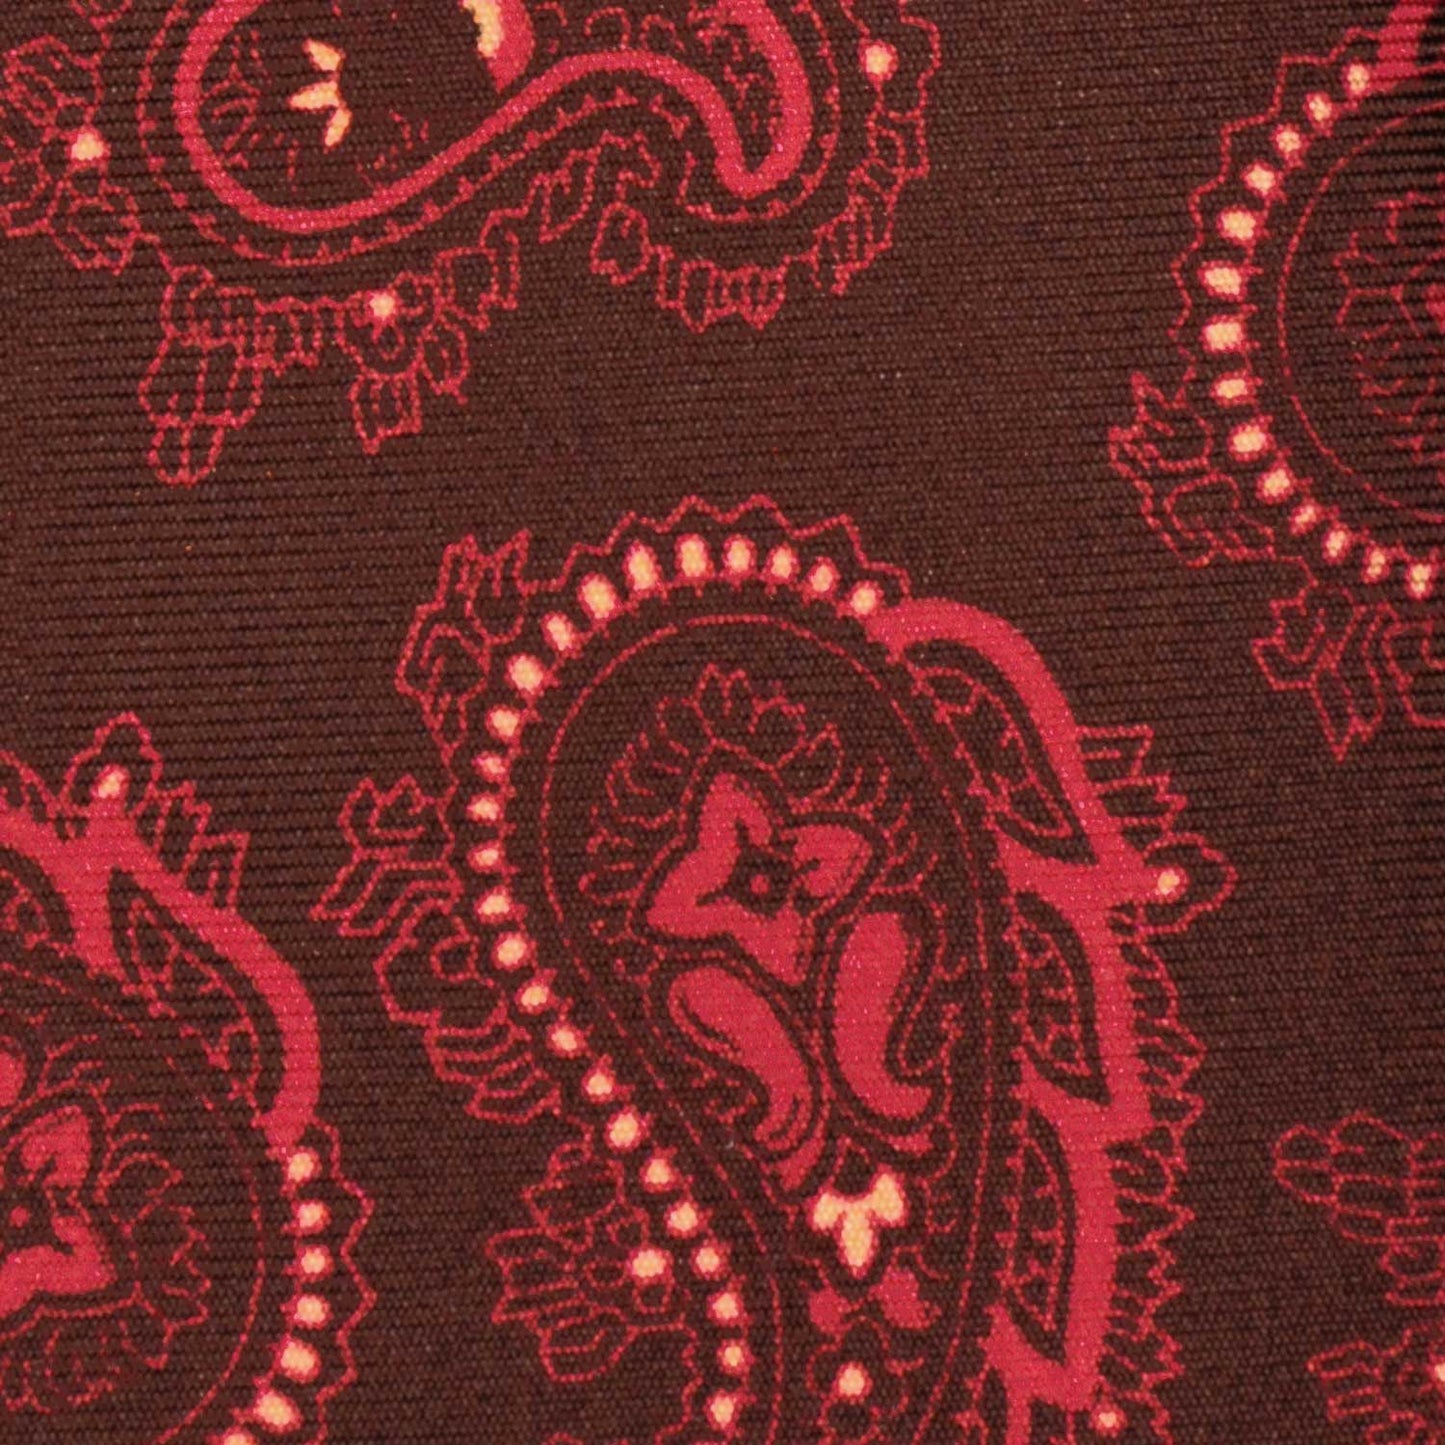 F.Marino Paisley Print Silk Tie 3 Folds Brown-Wools Boutique Uomo